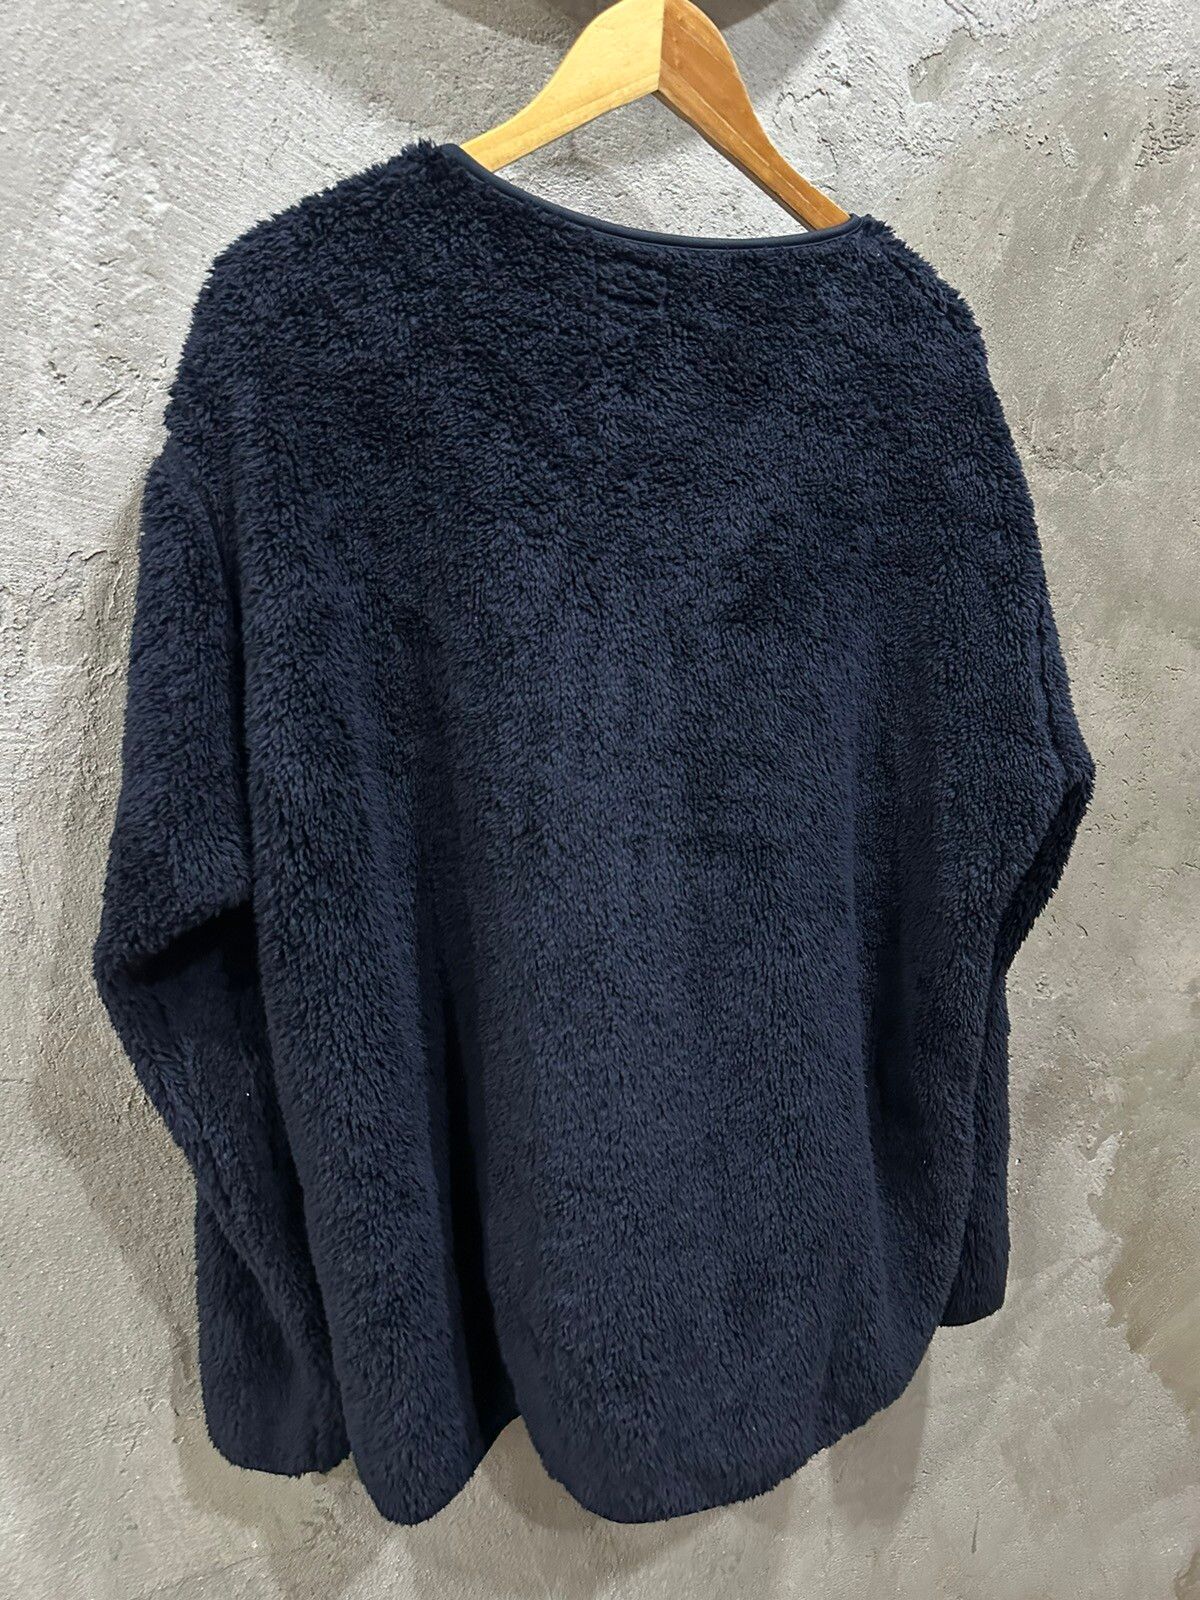 Uniqlo x Engineered Garments Fleece Pullover Navy - 2